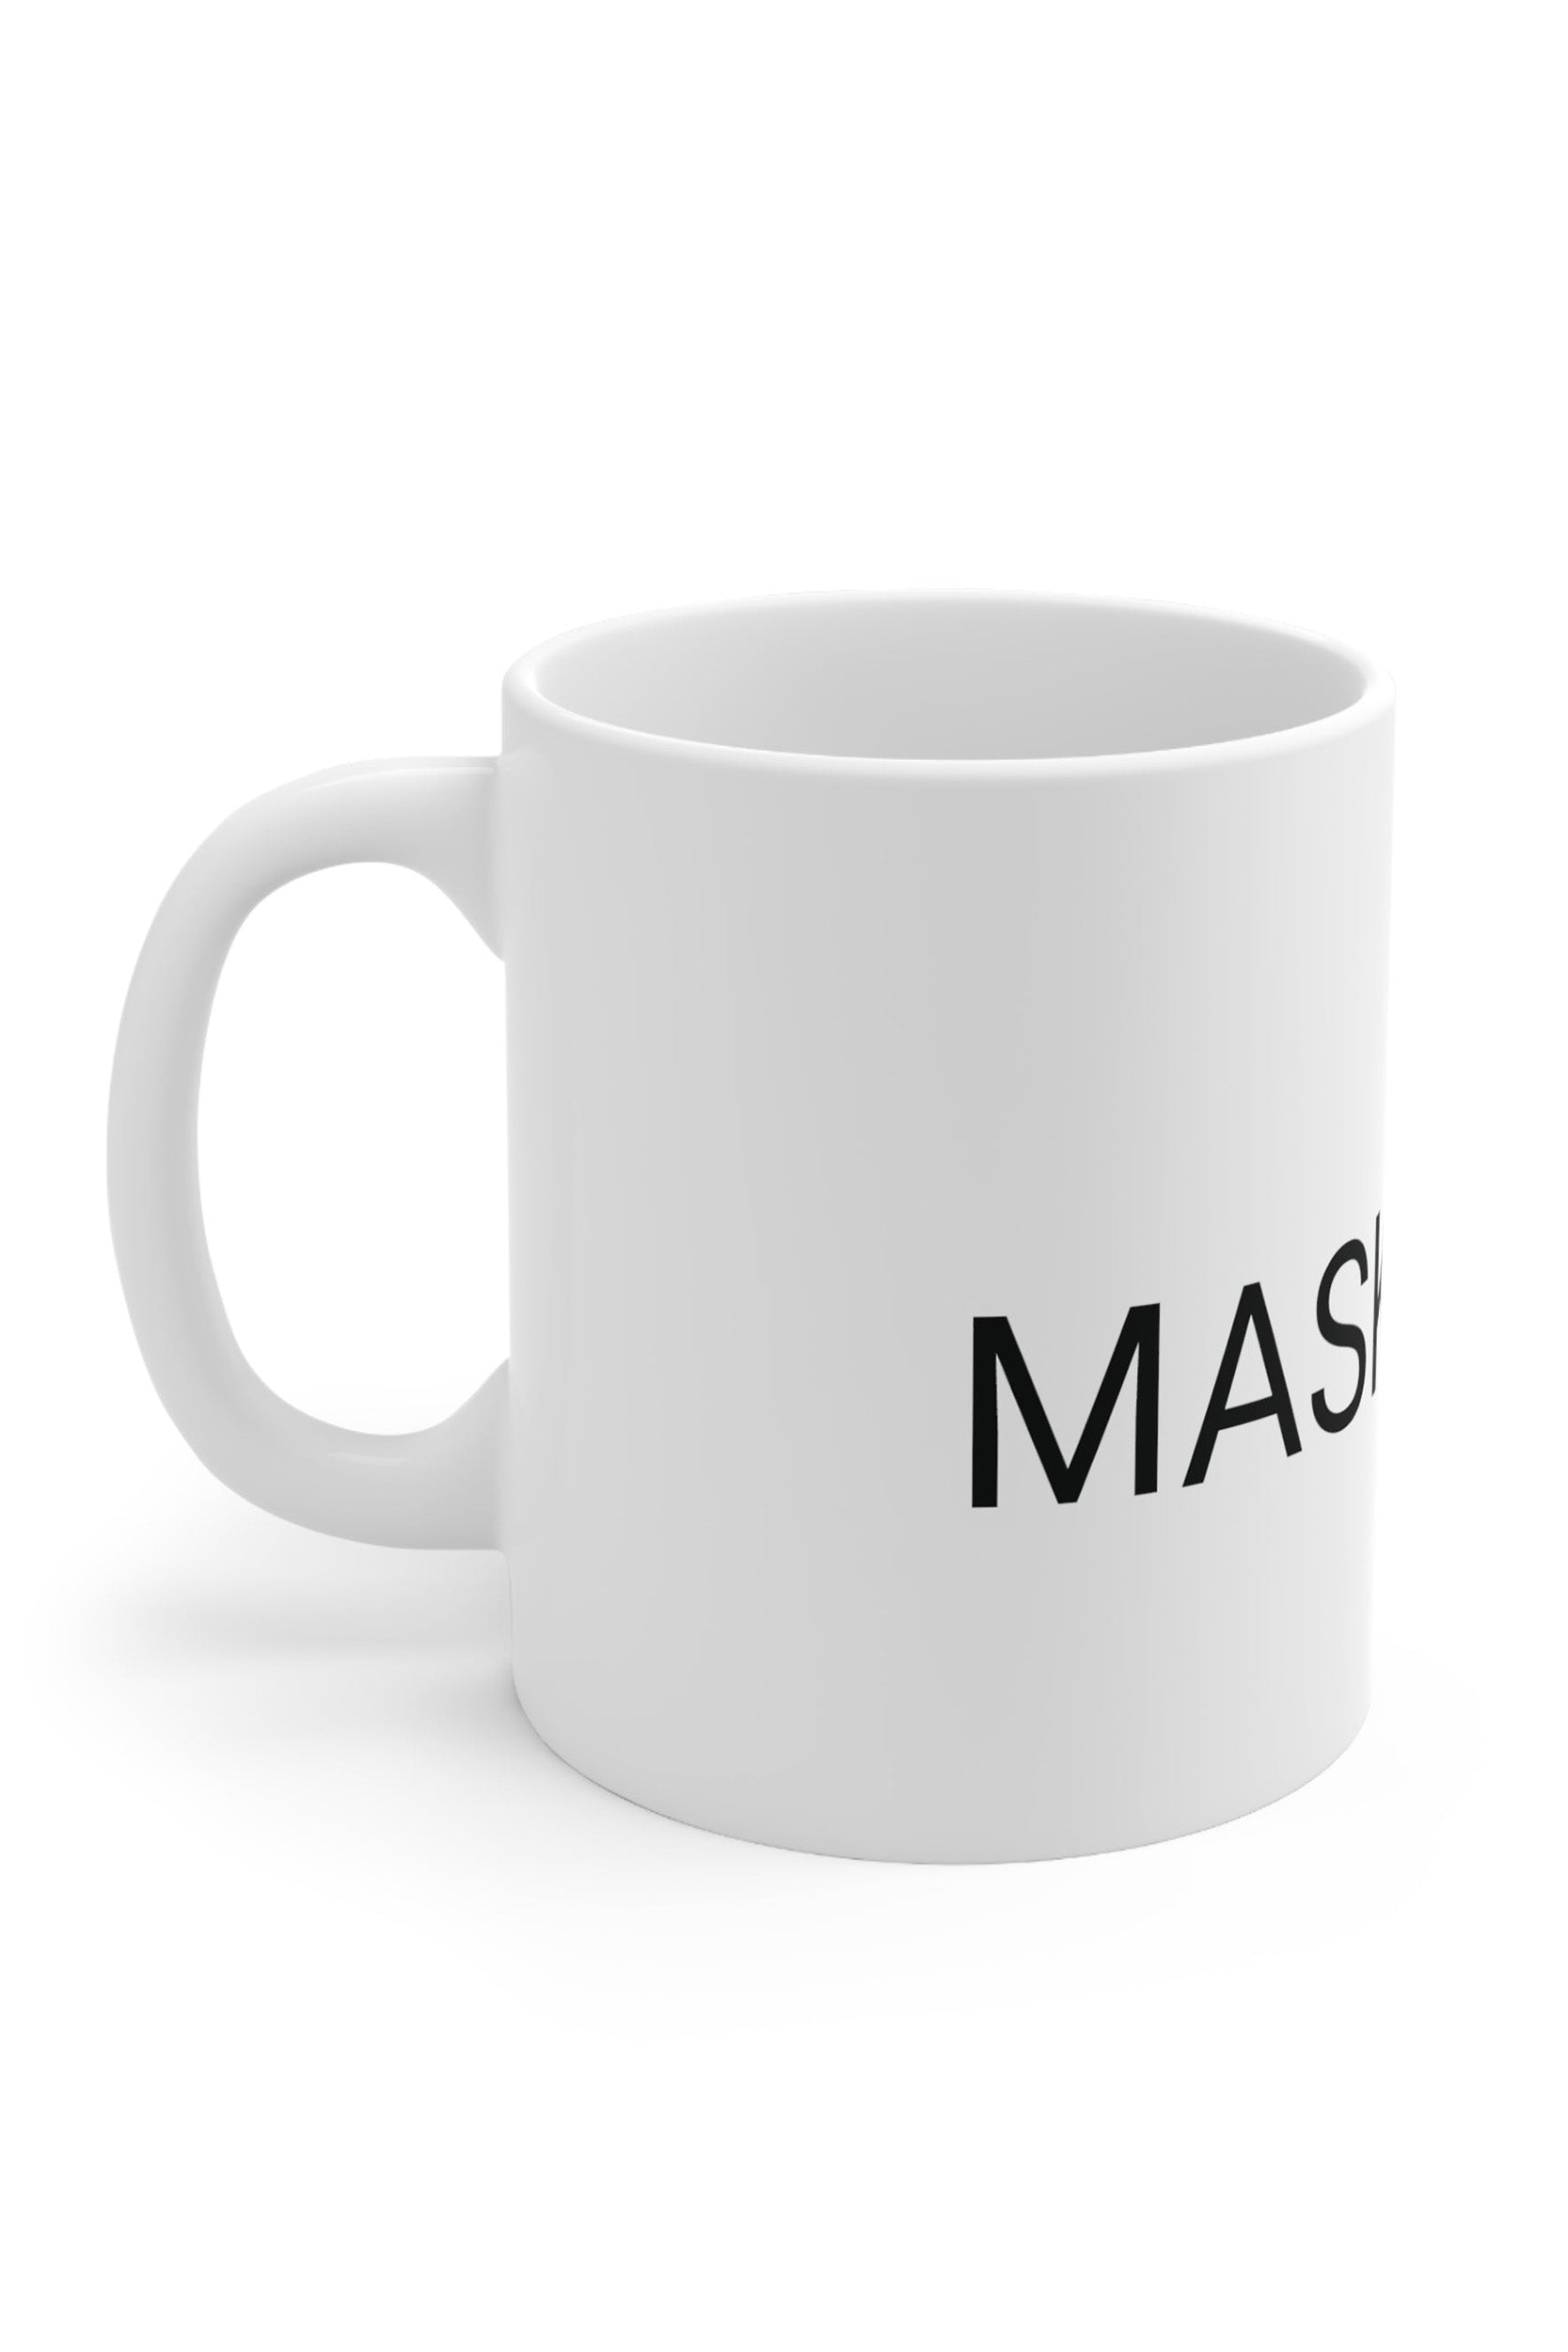 "MASK UP" Ceramic Mug 11oz